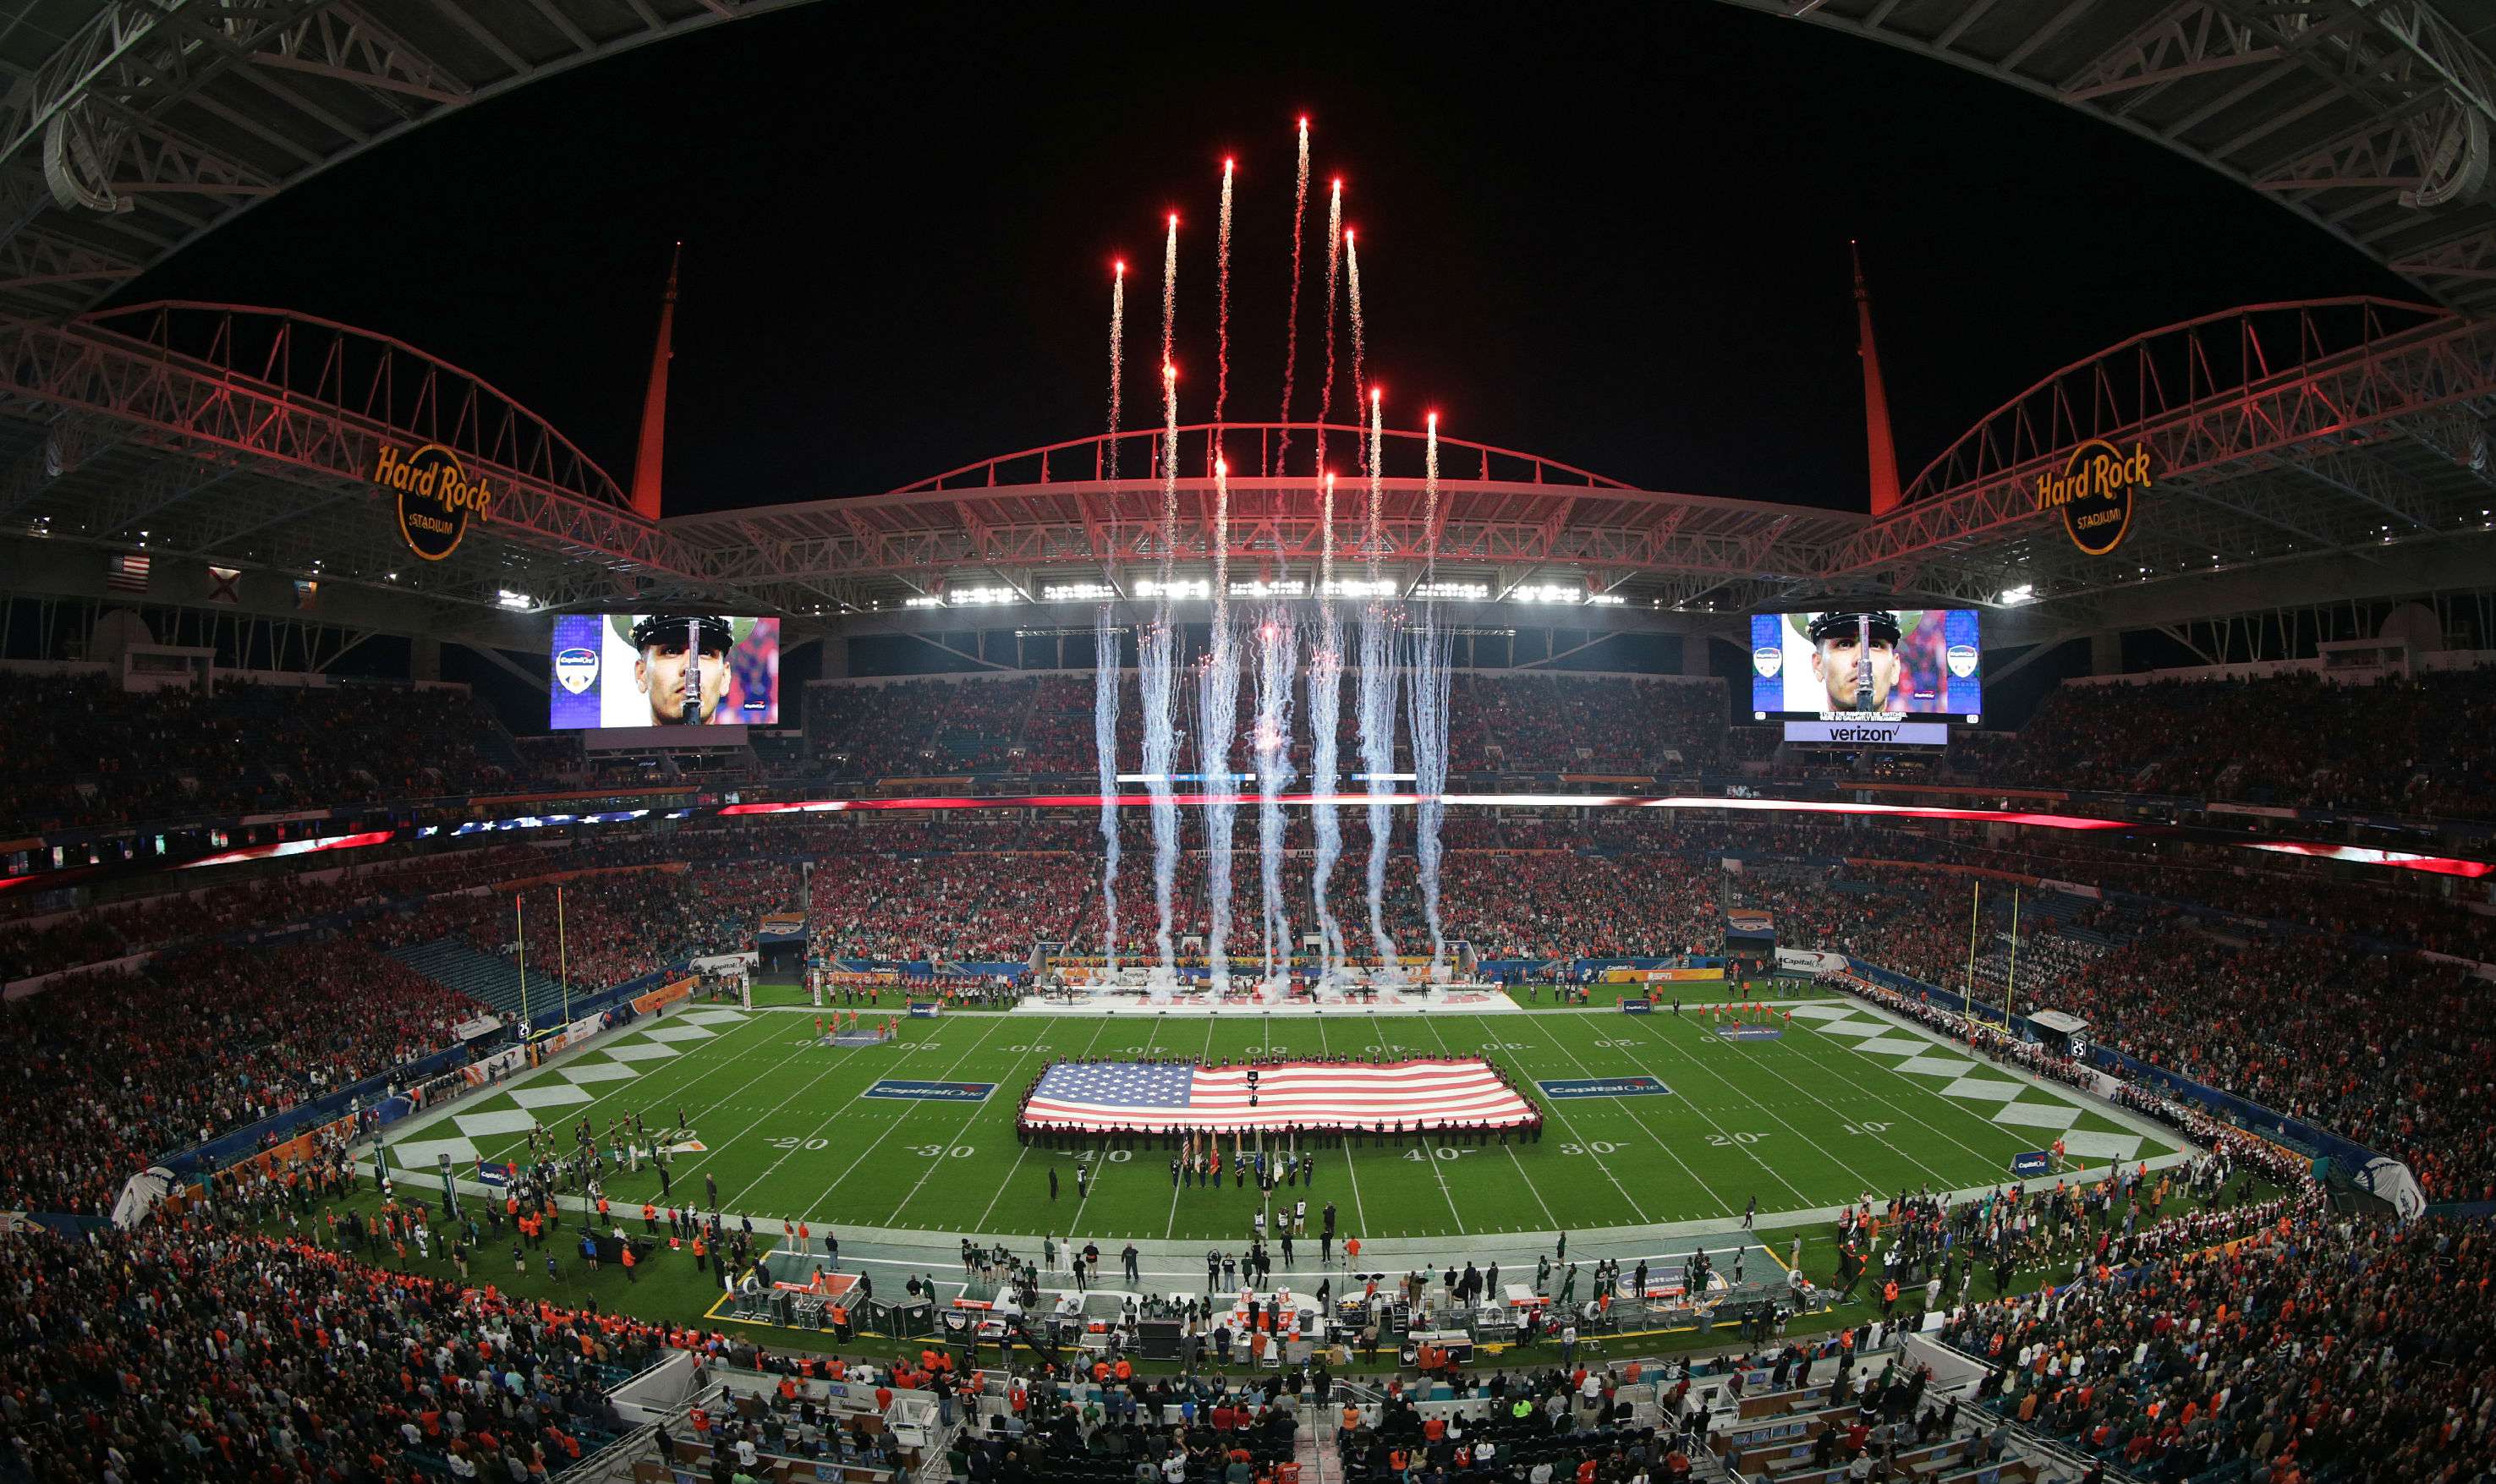 Stadium Where Super Bowl Is This Year Image to u